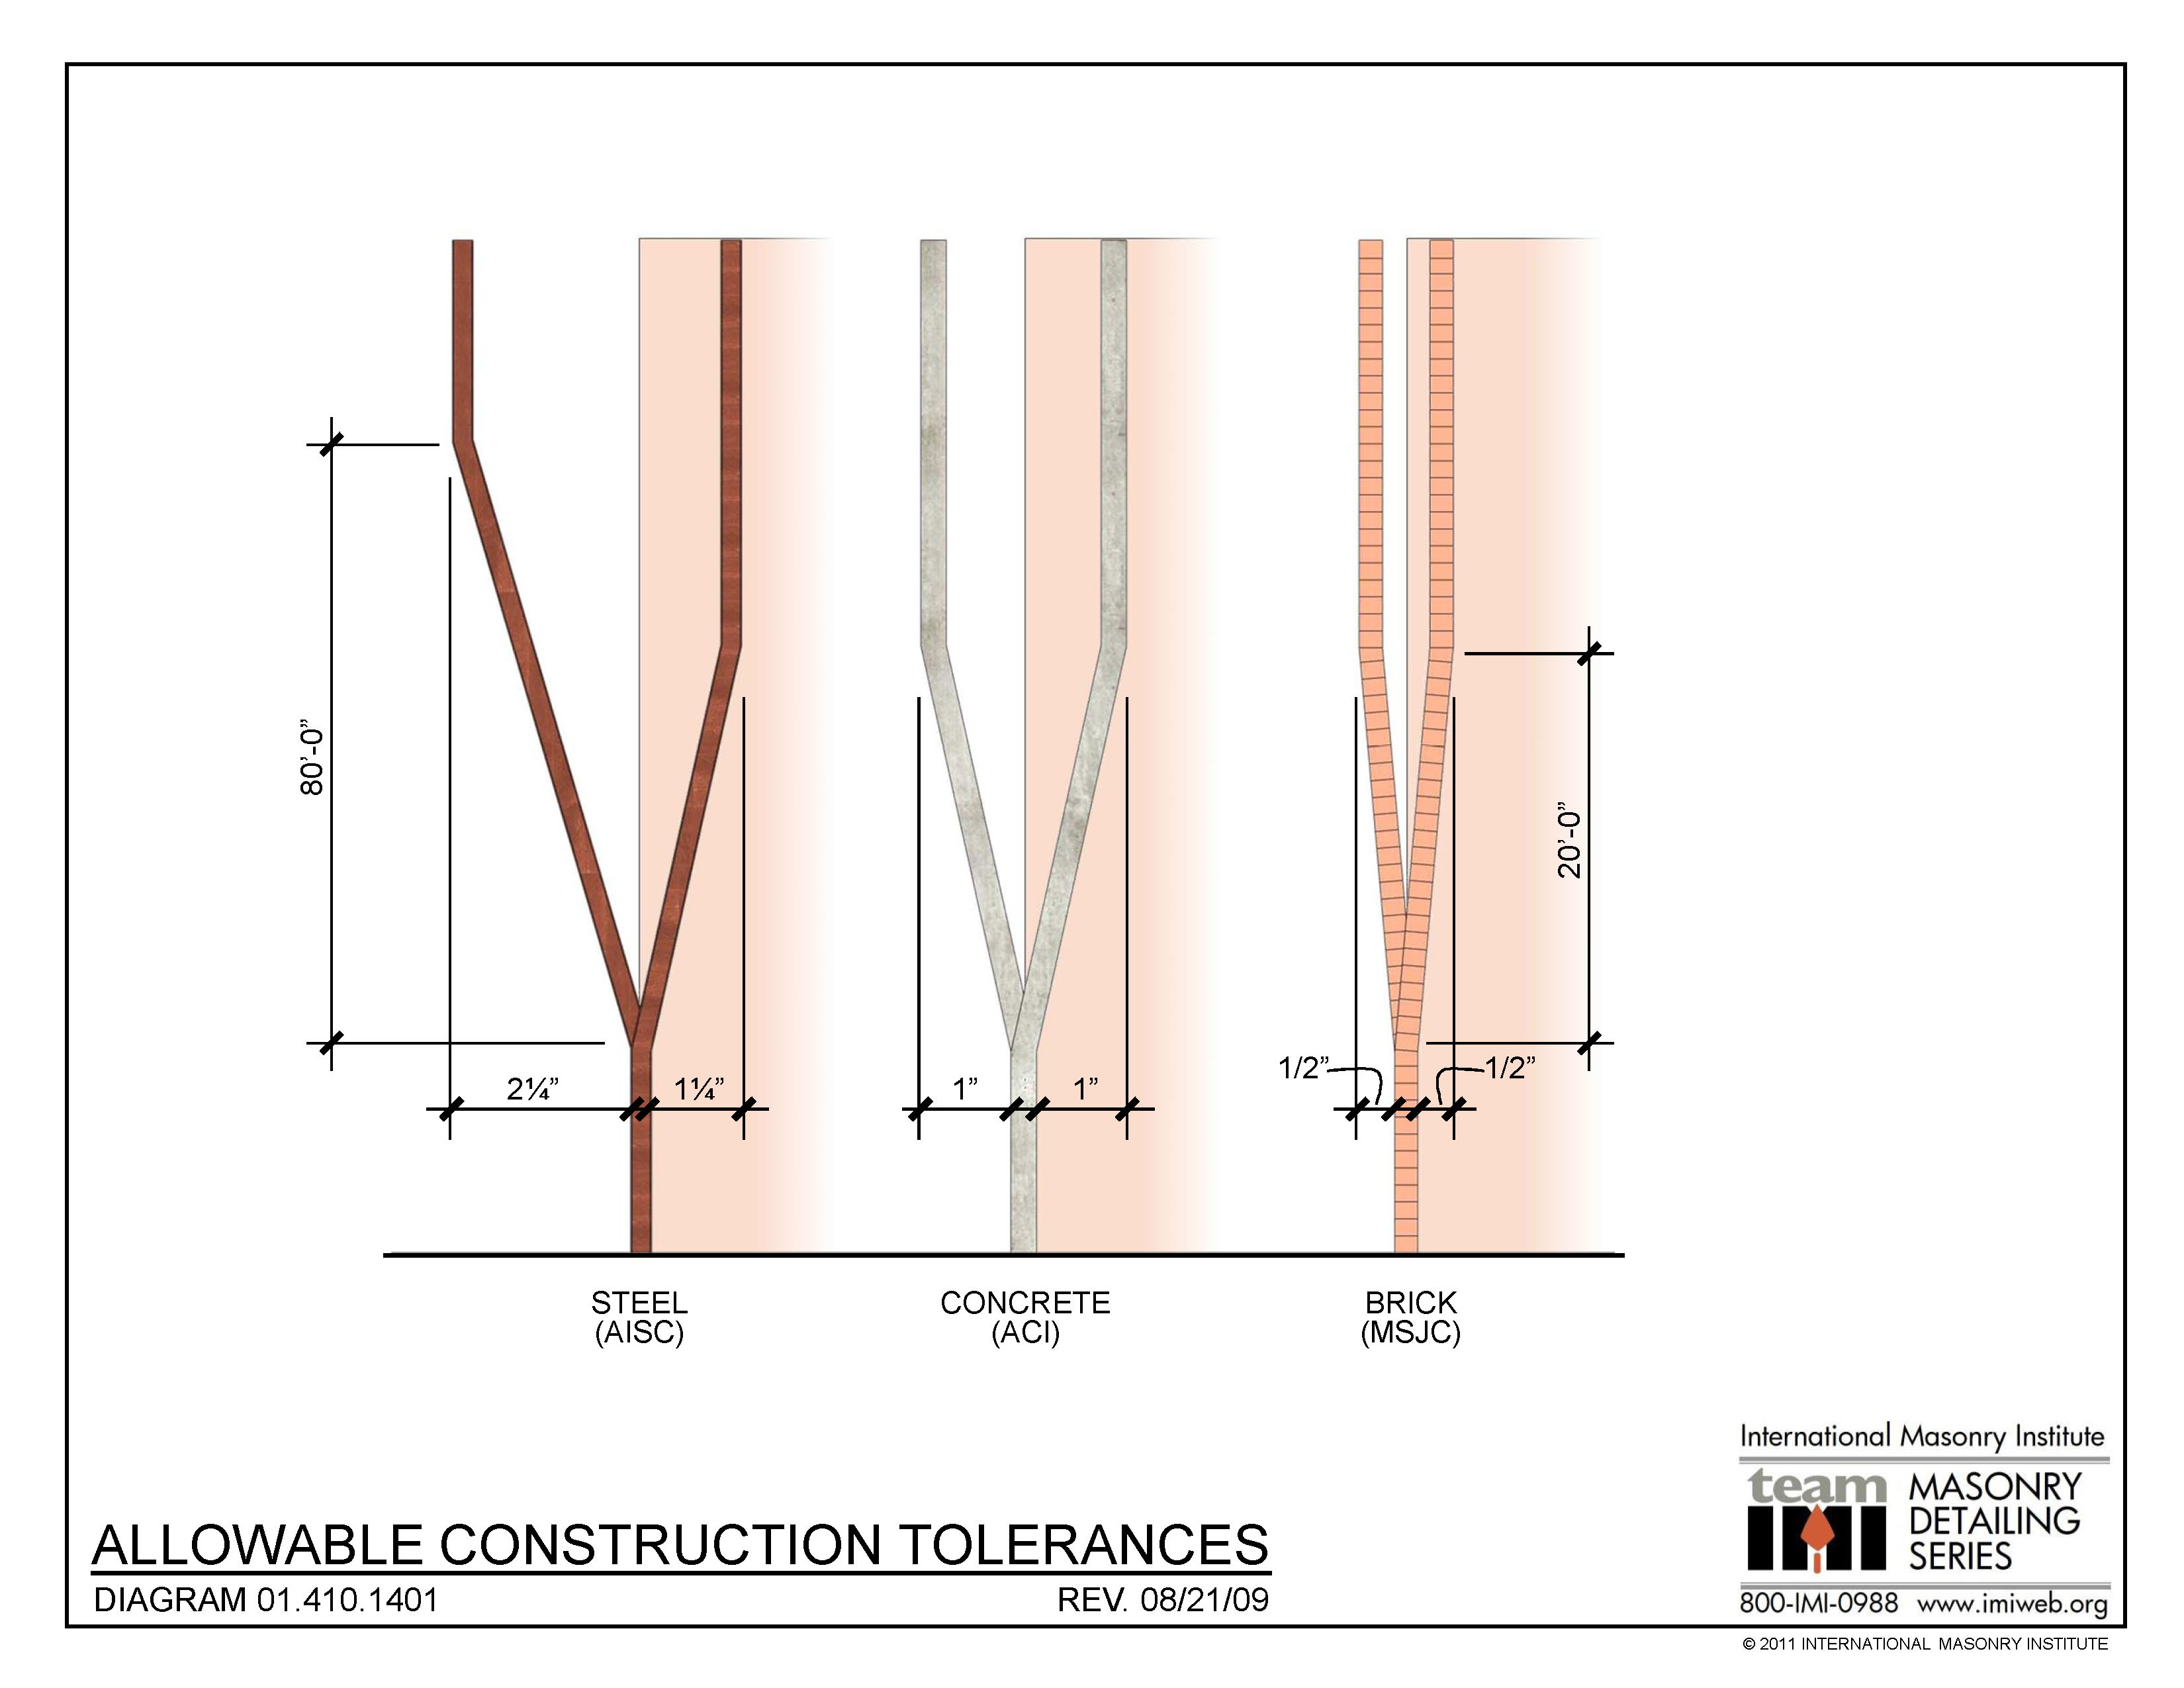 01.410.1401: Allowable Construction Tolerances | International Masonry